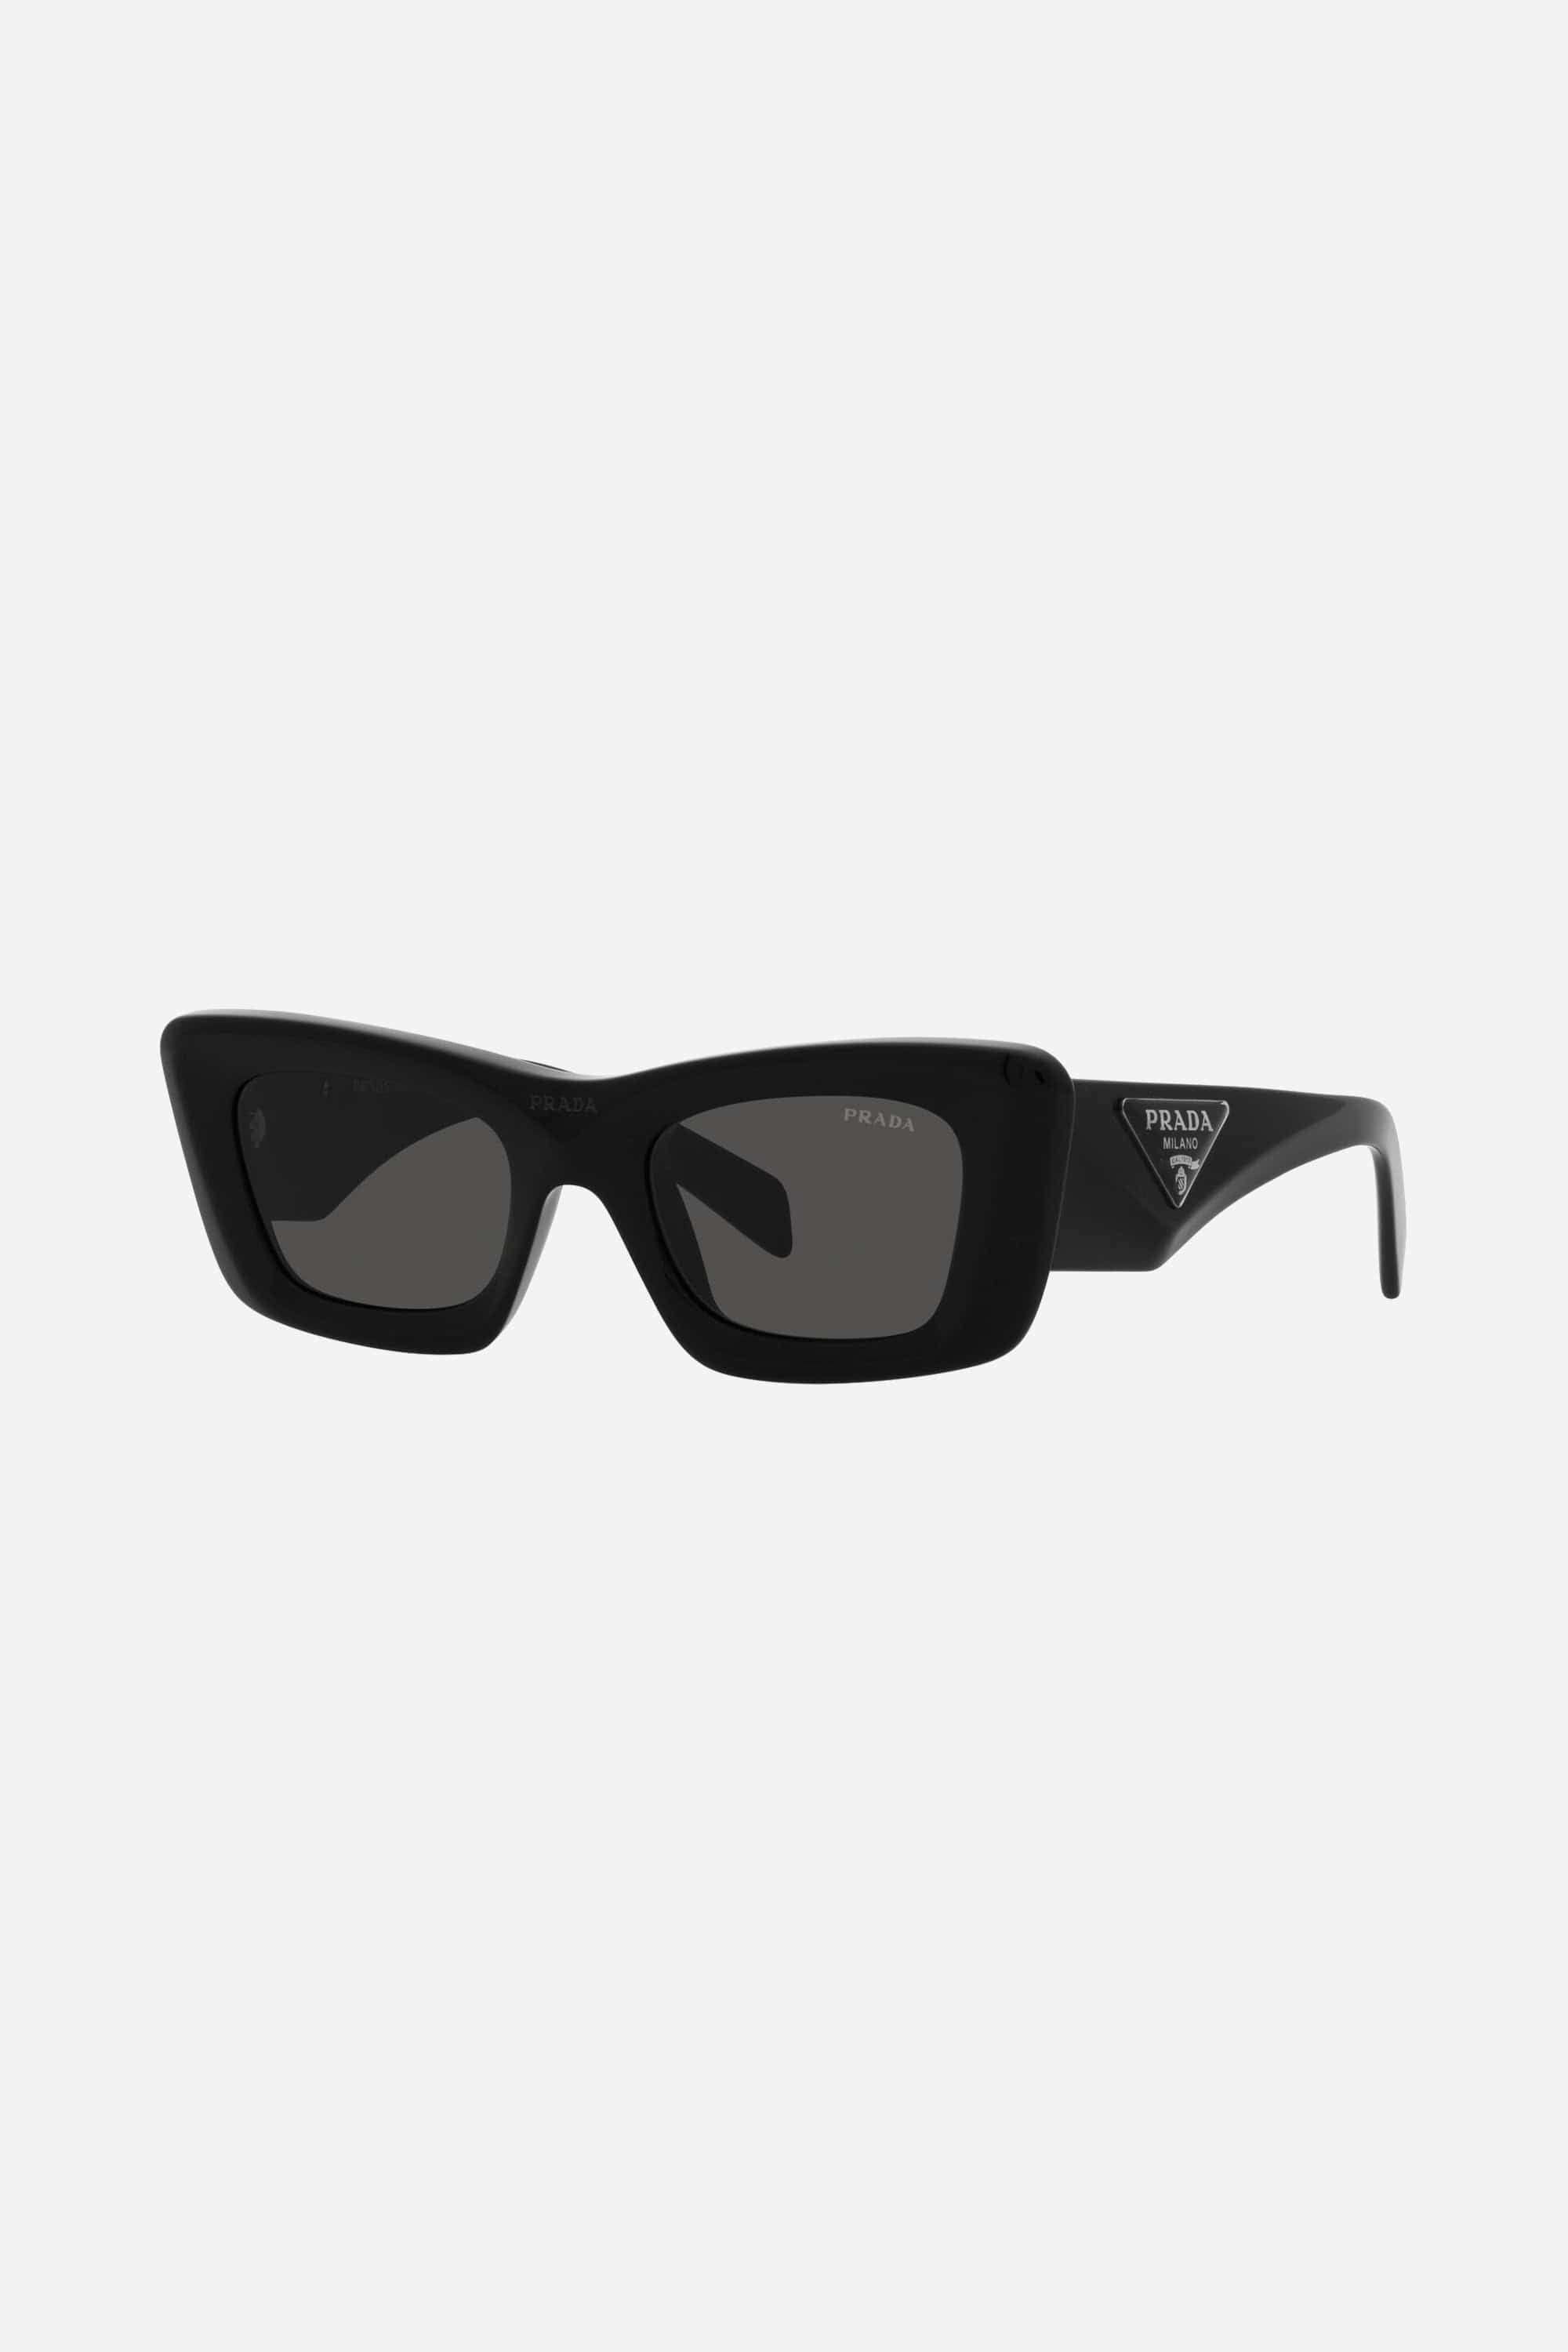 Prada cat-eye black sunglasses Catwalk - Eyewear Club